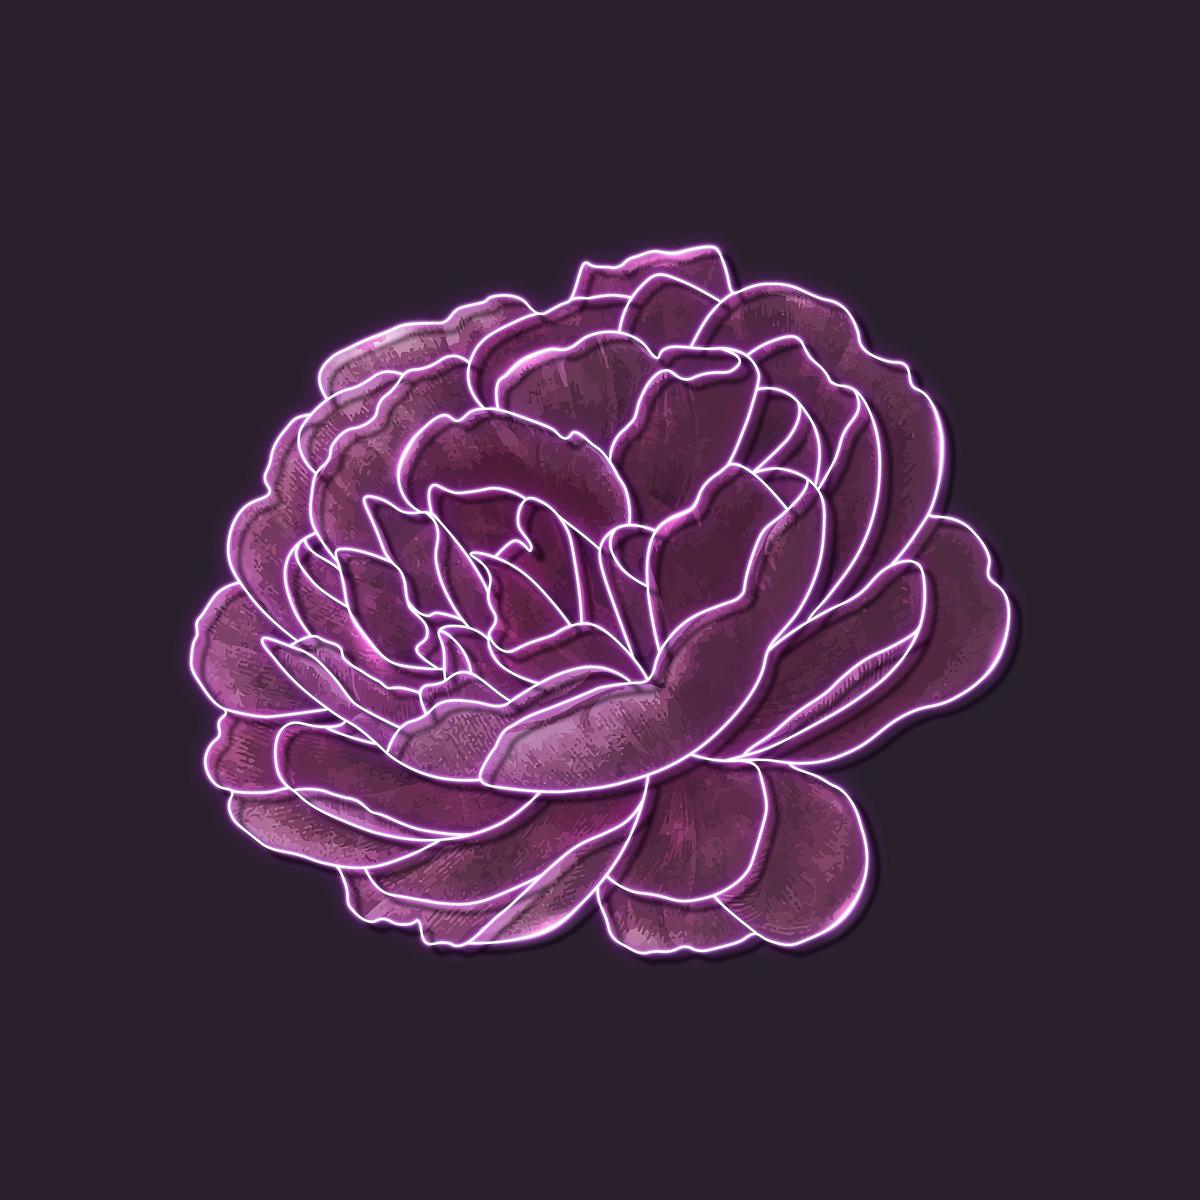 Neon purple rose